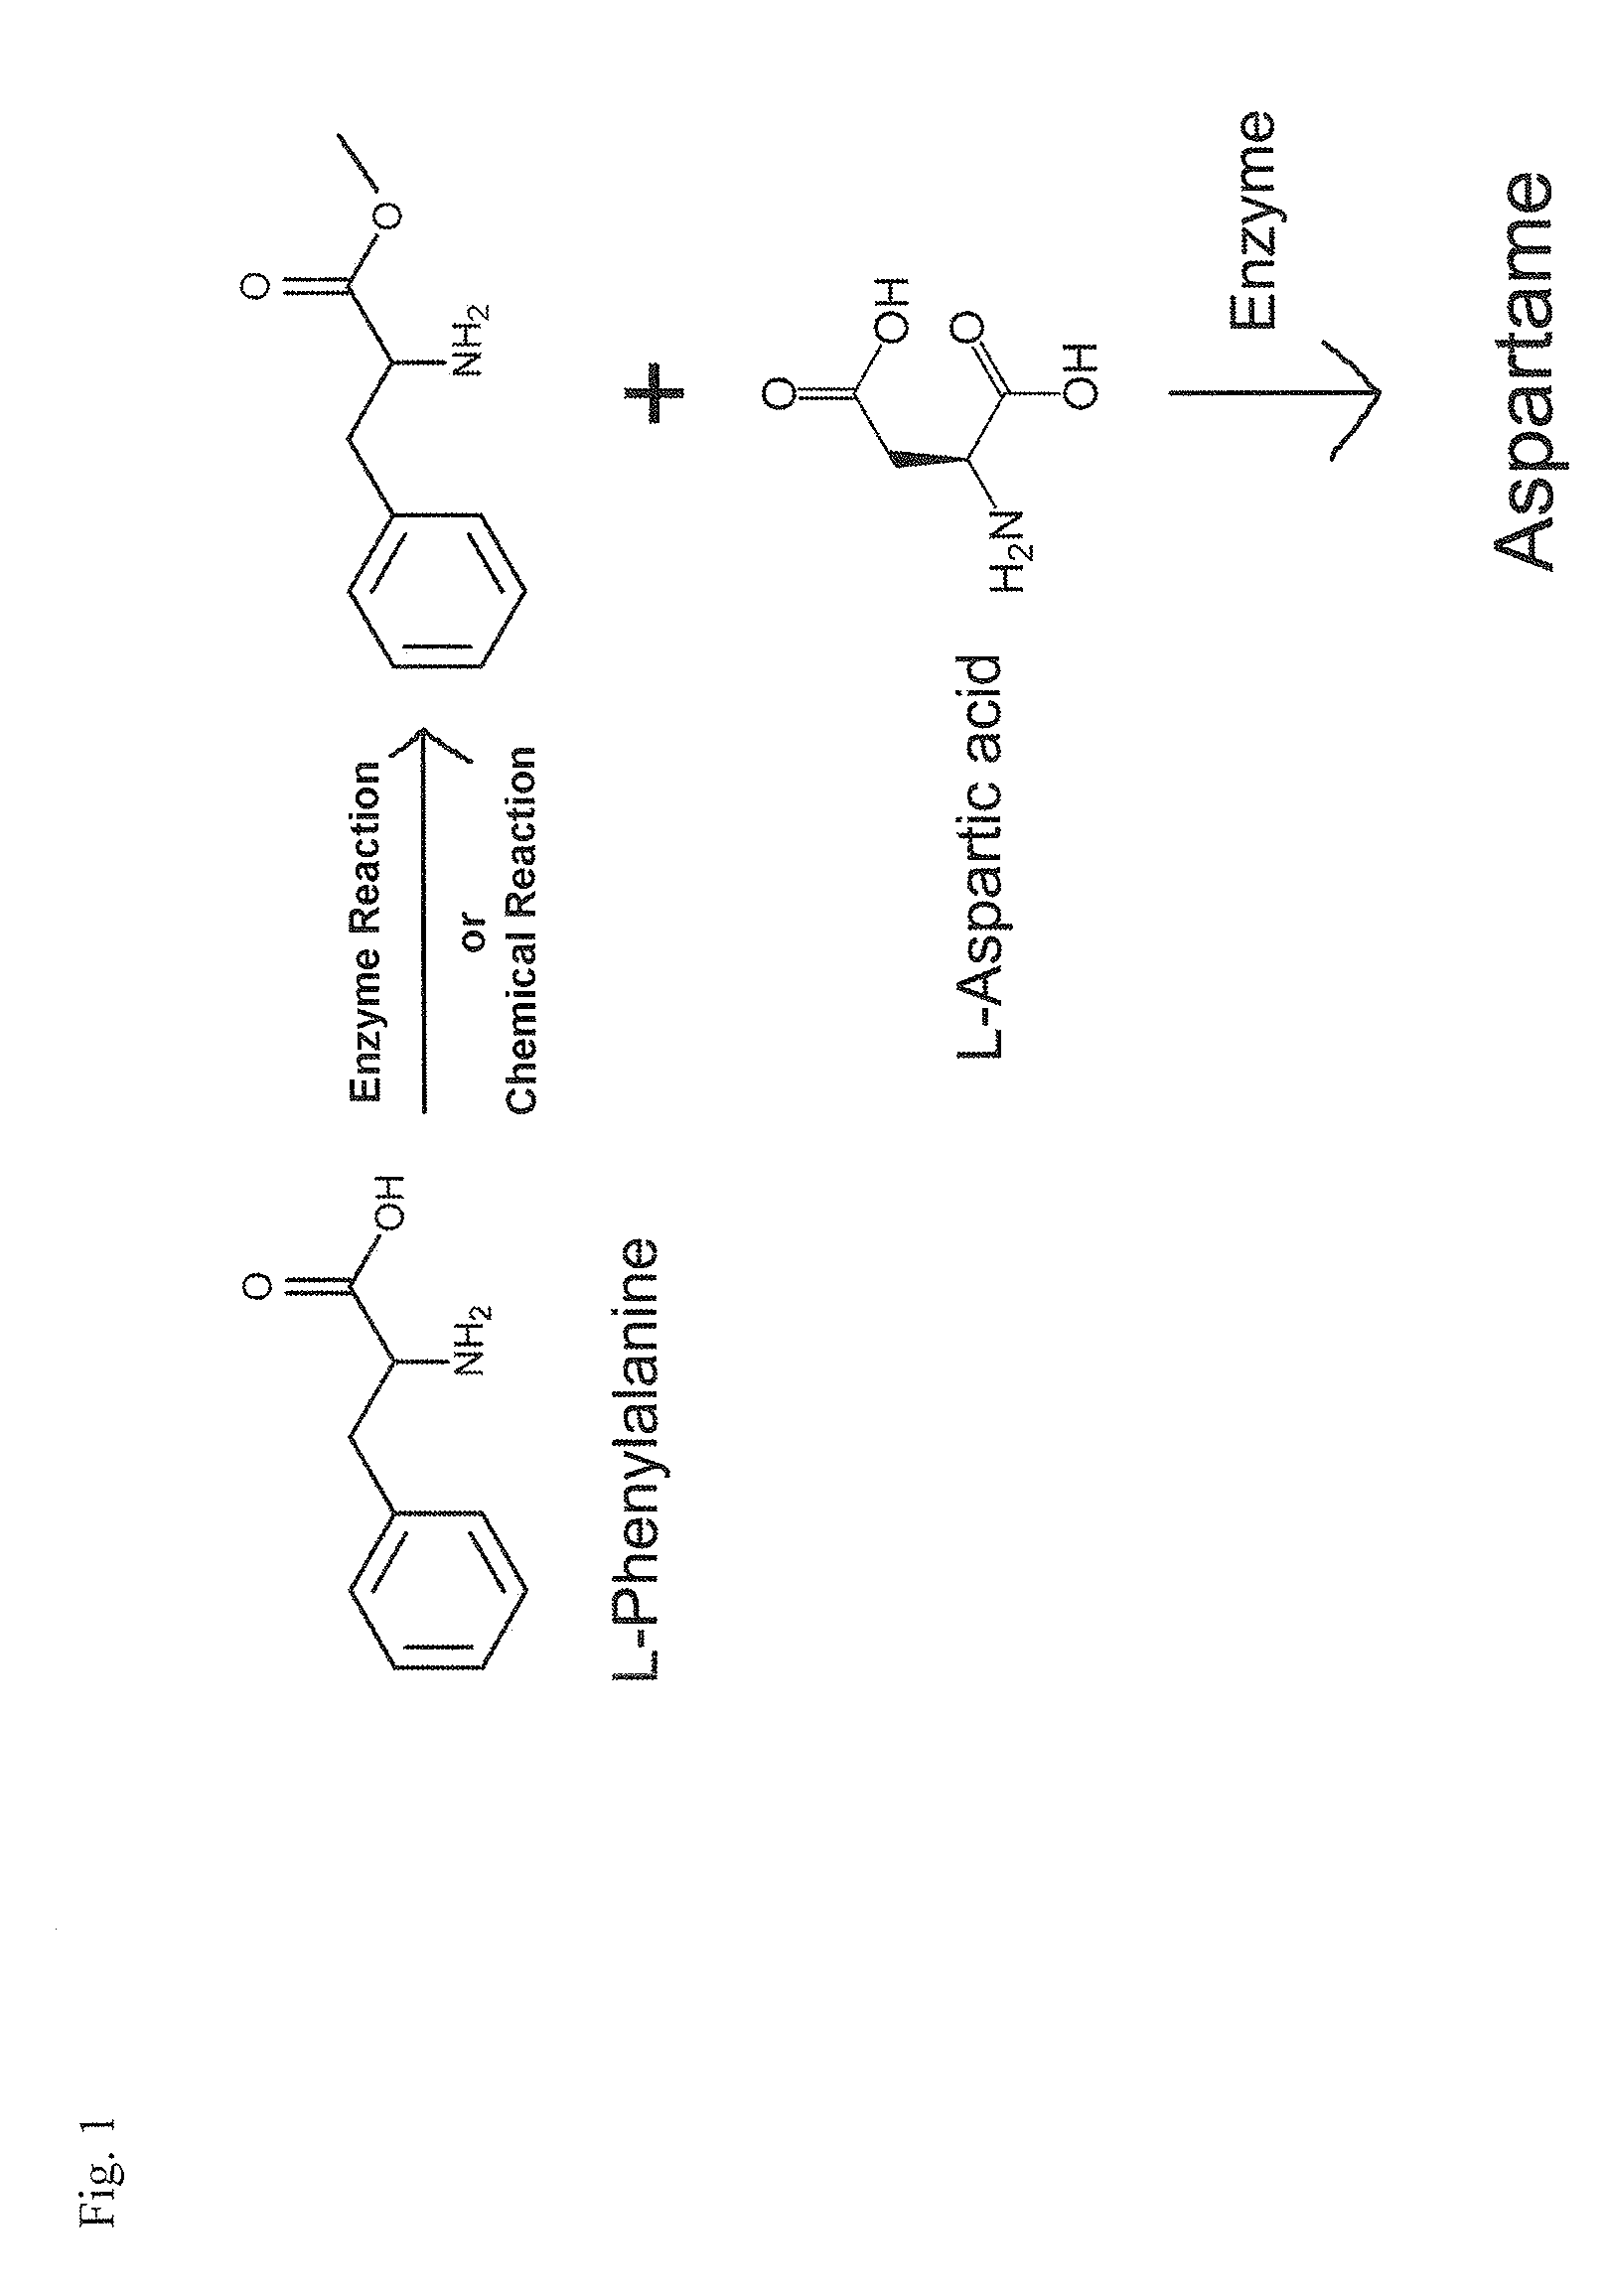 Enzymatic method for preparing aspartam